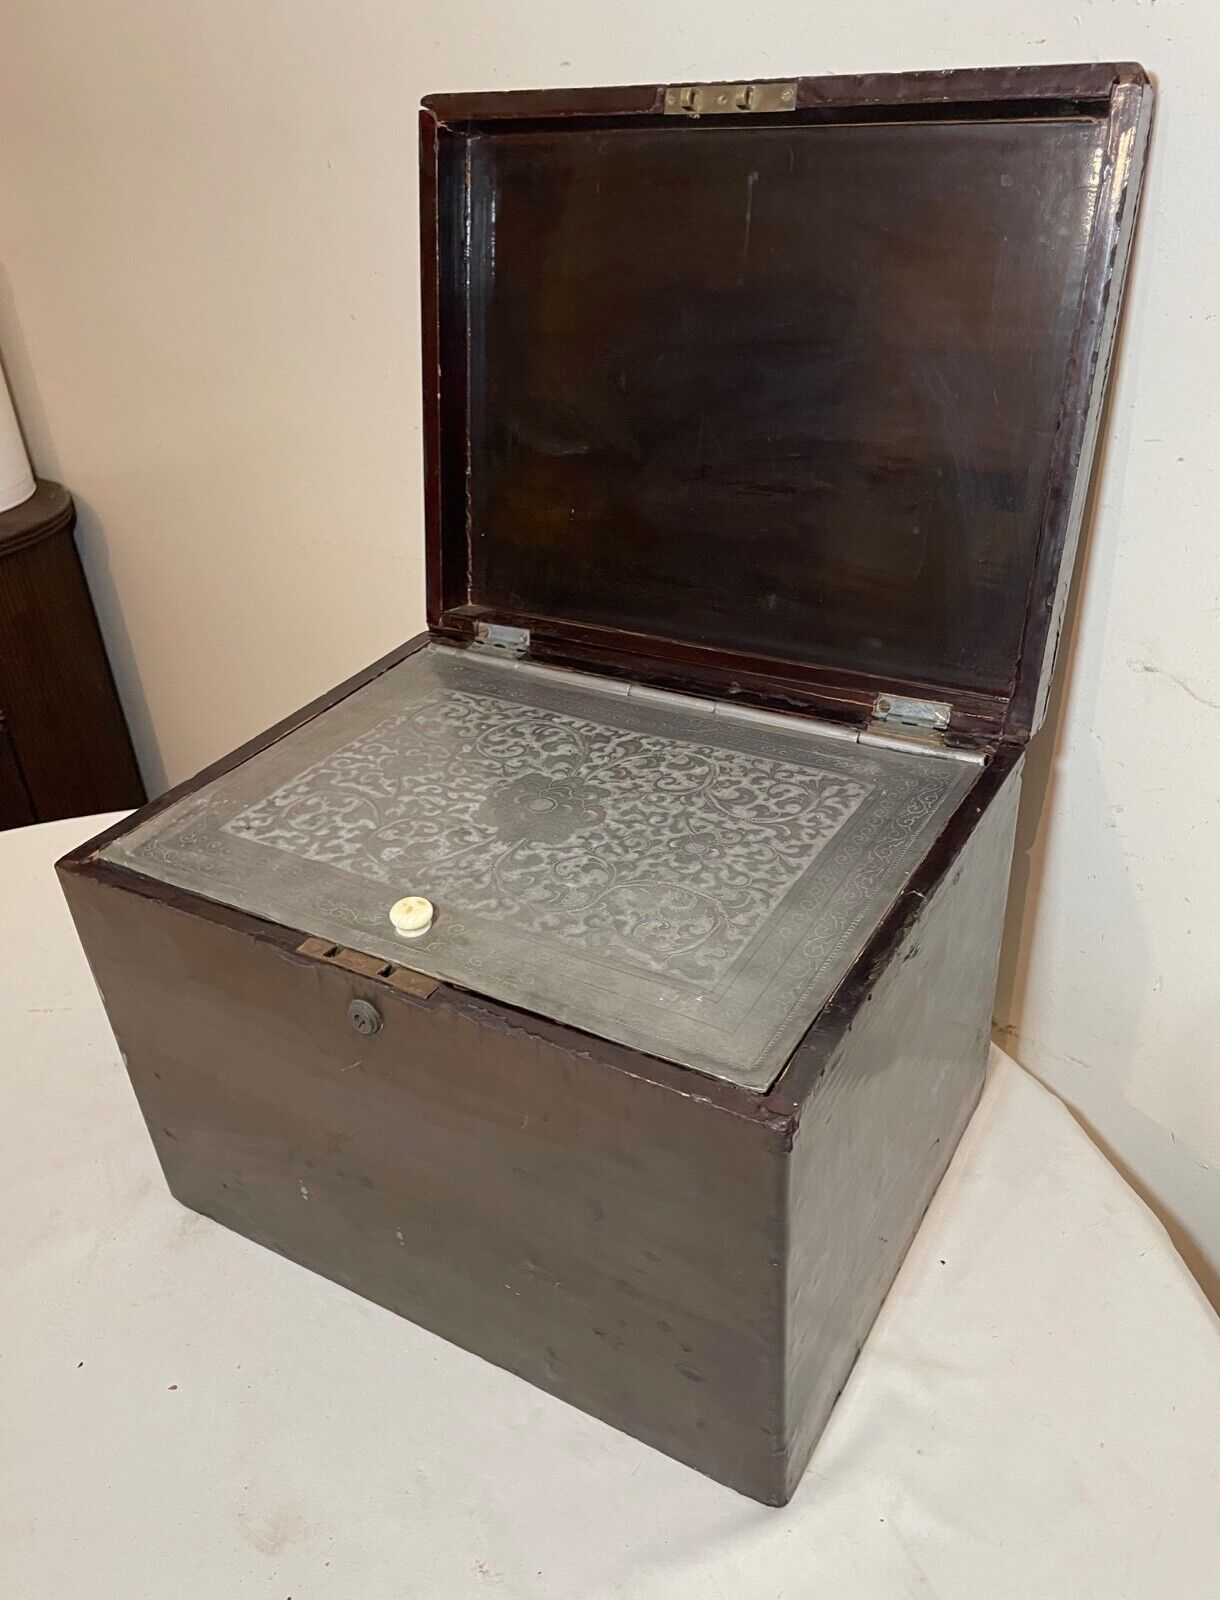 LARGE antique 1800's handmade J Bramah London lacquered wood pewter humidor box